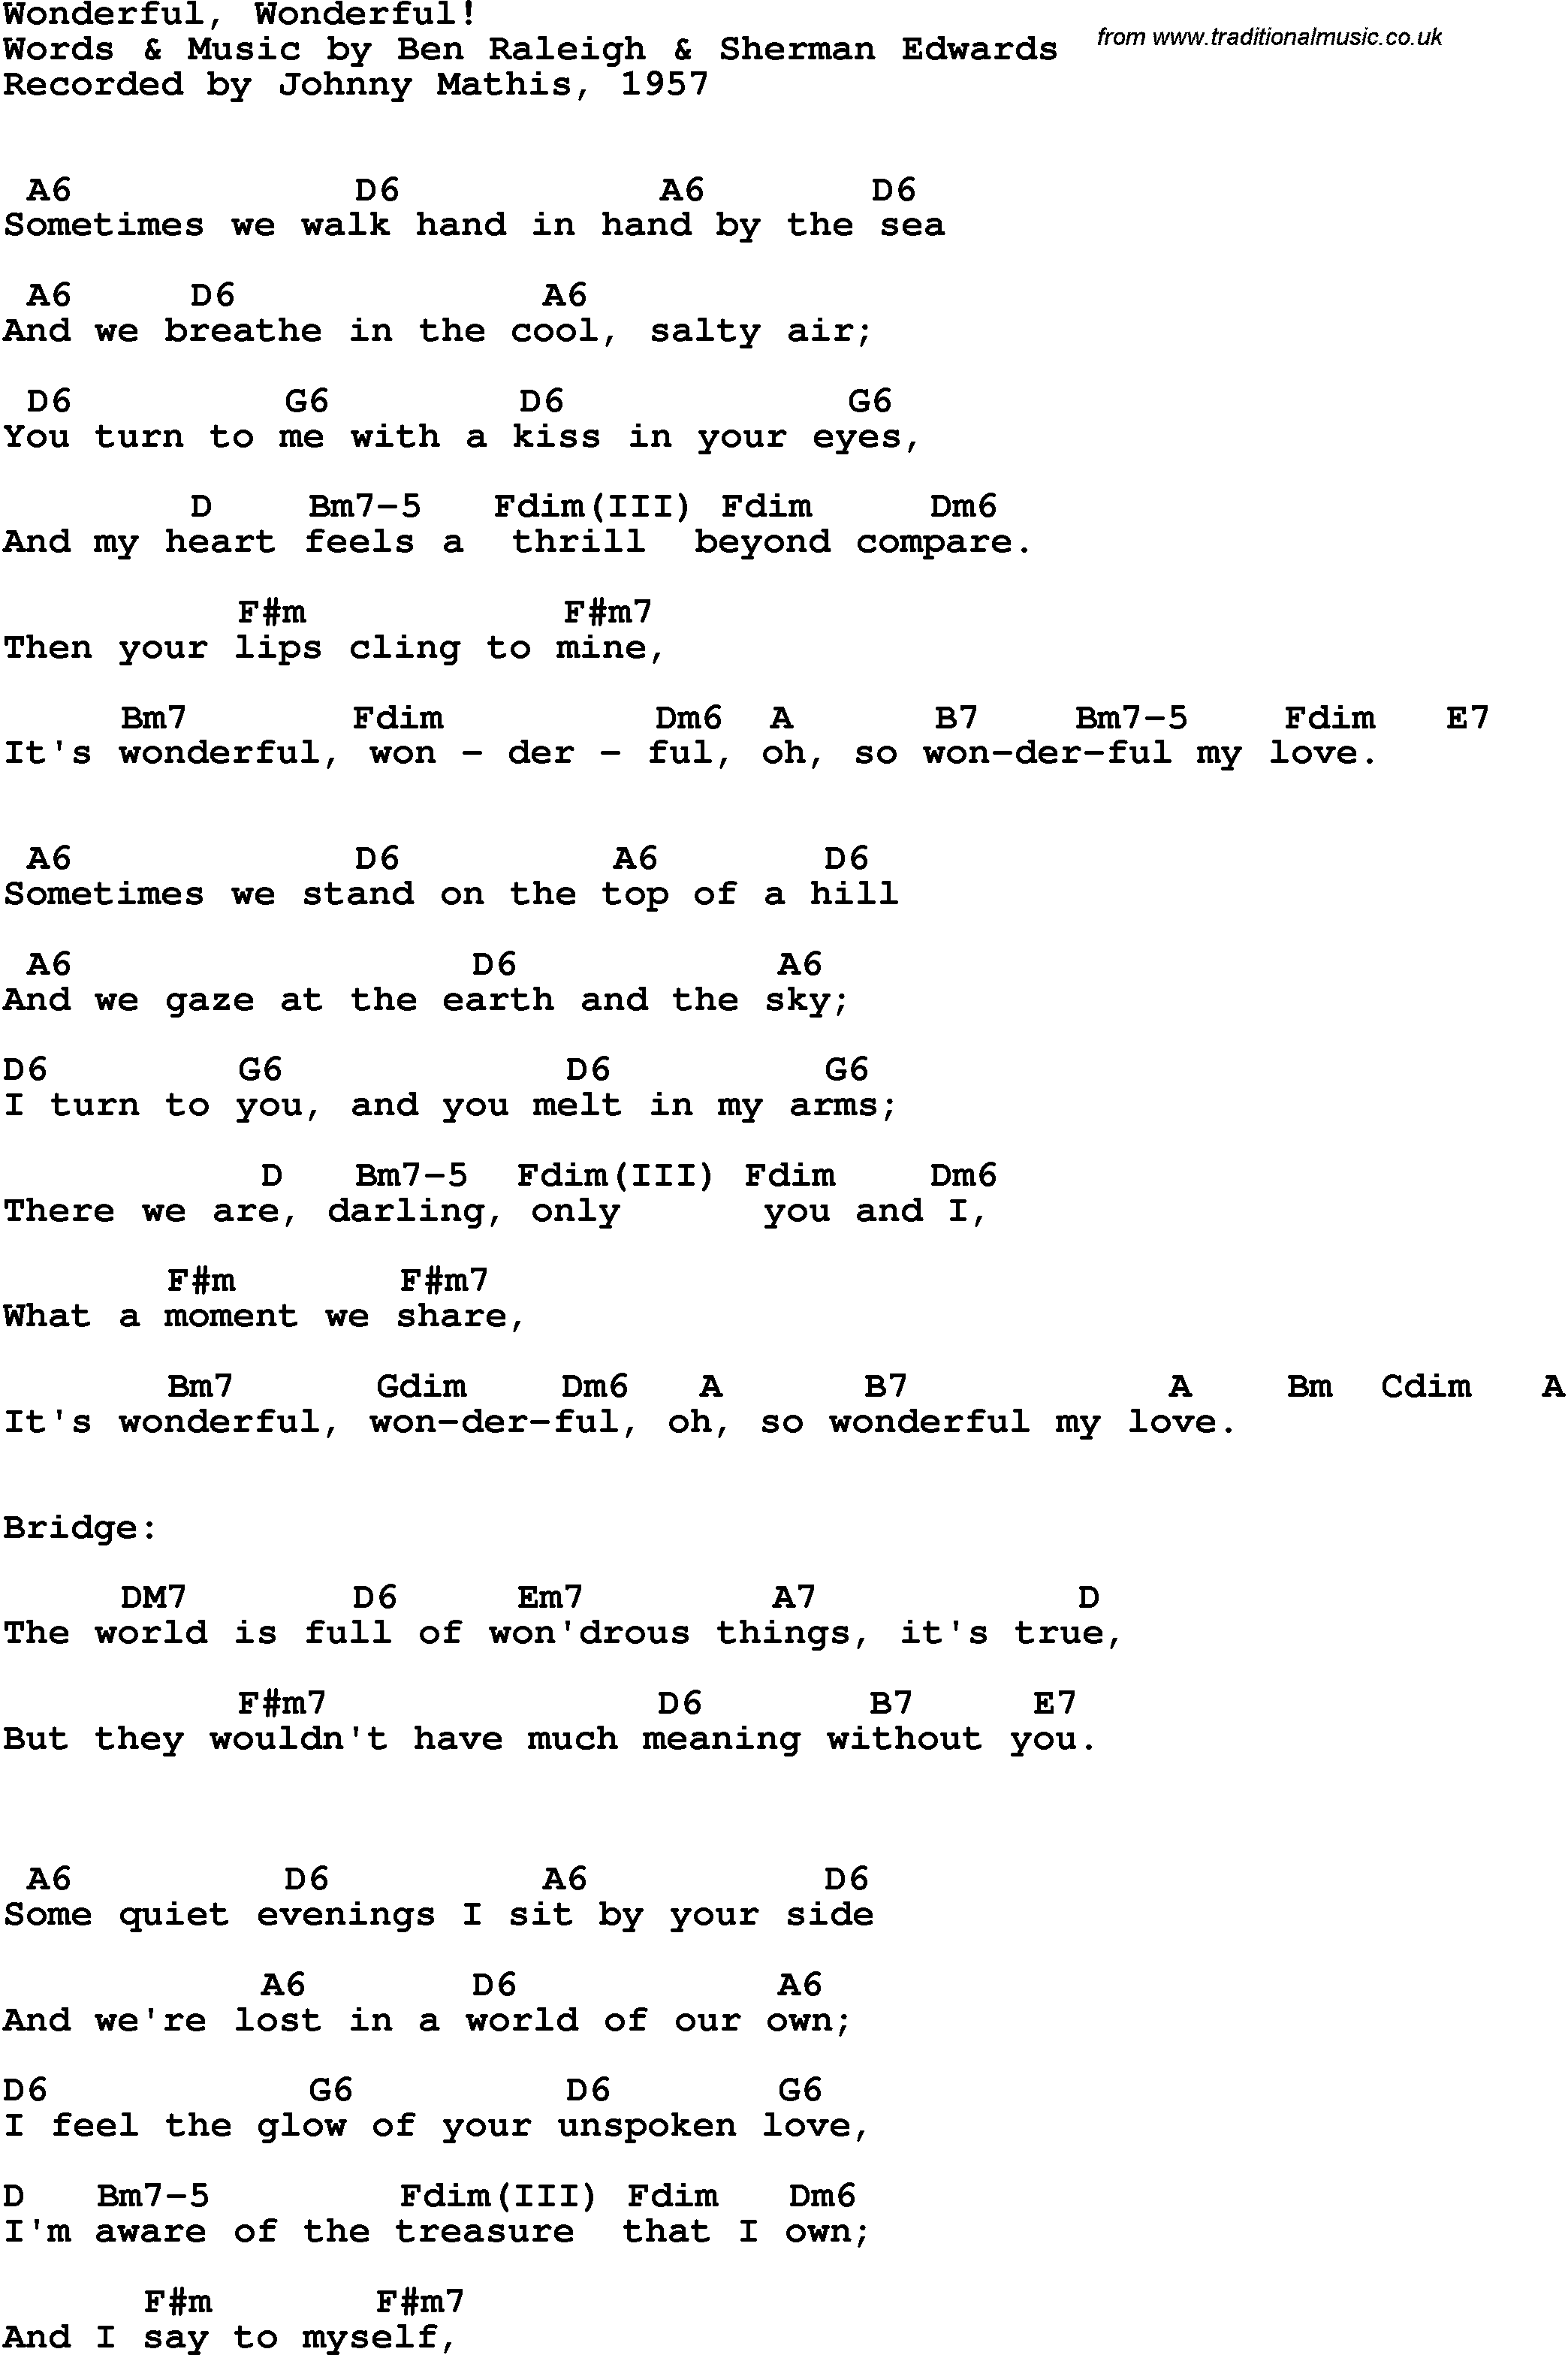 Song Lyrics with guitar chords for Wonderful! Wonderful! - Johnny Mathis, 1957